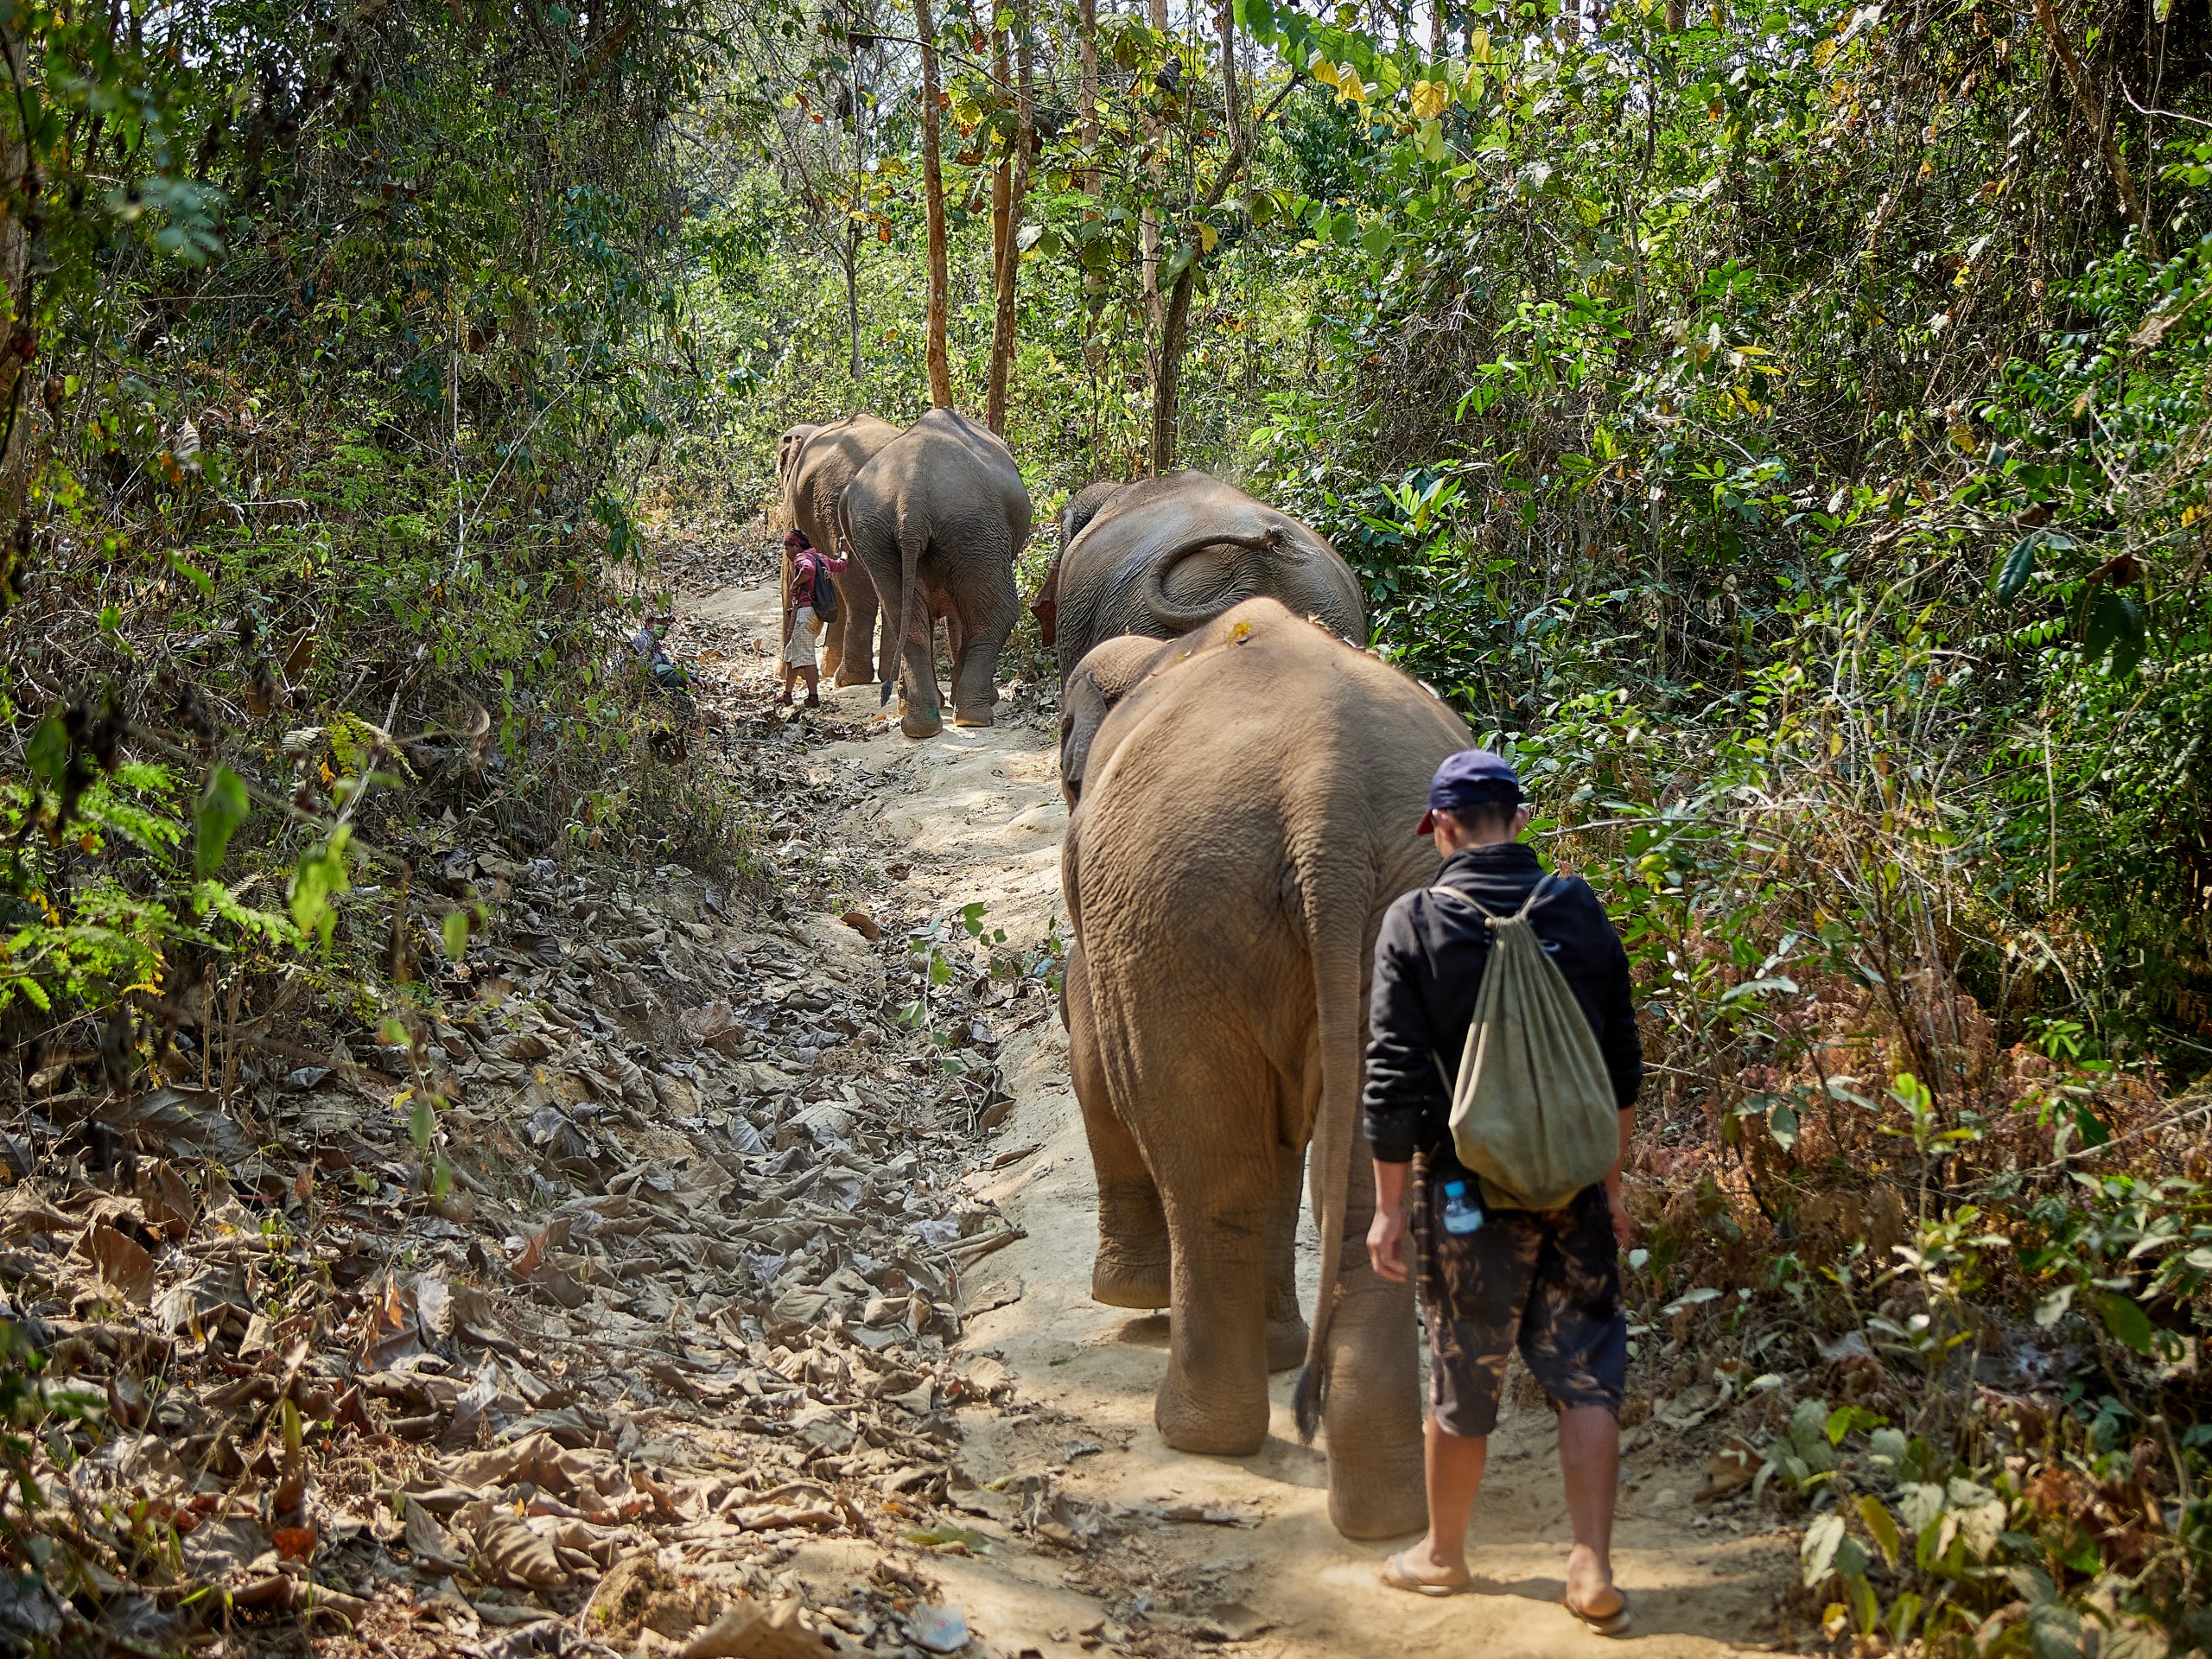 About Elephant Village